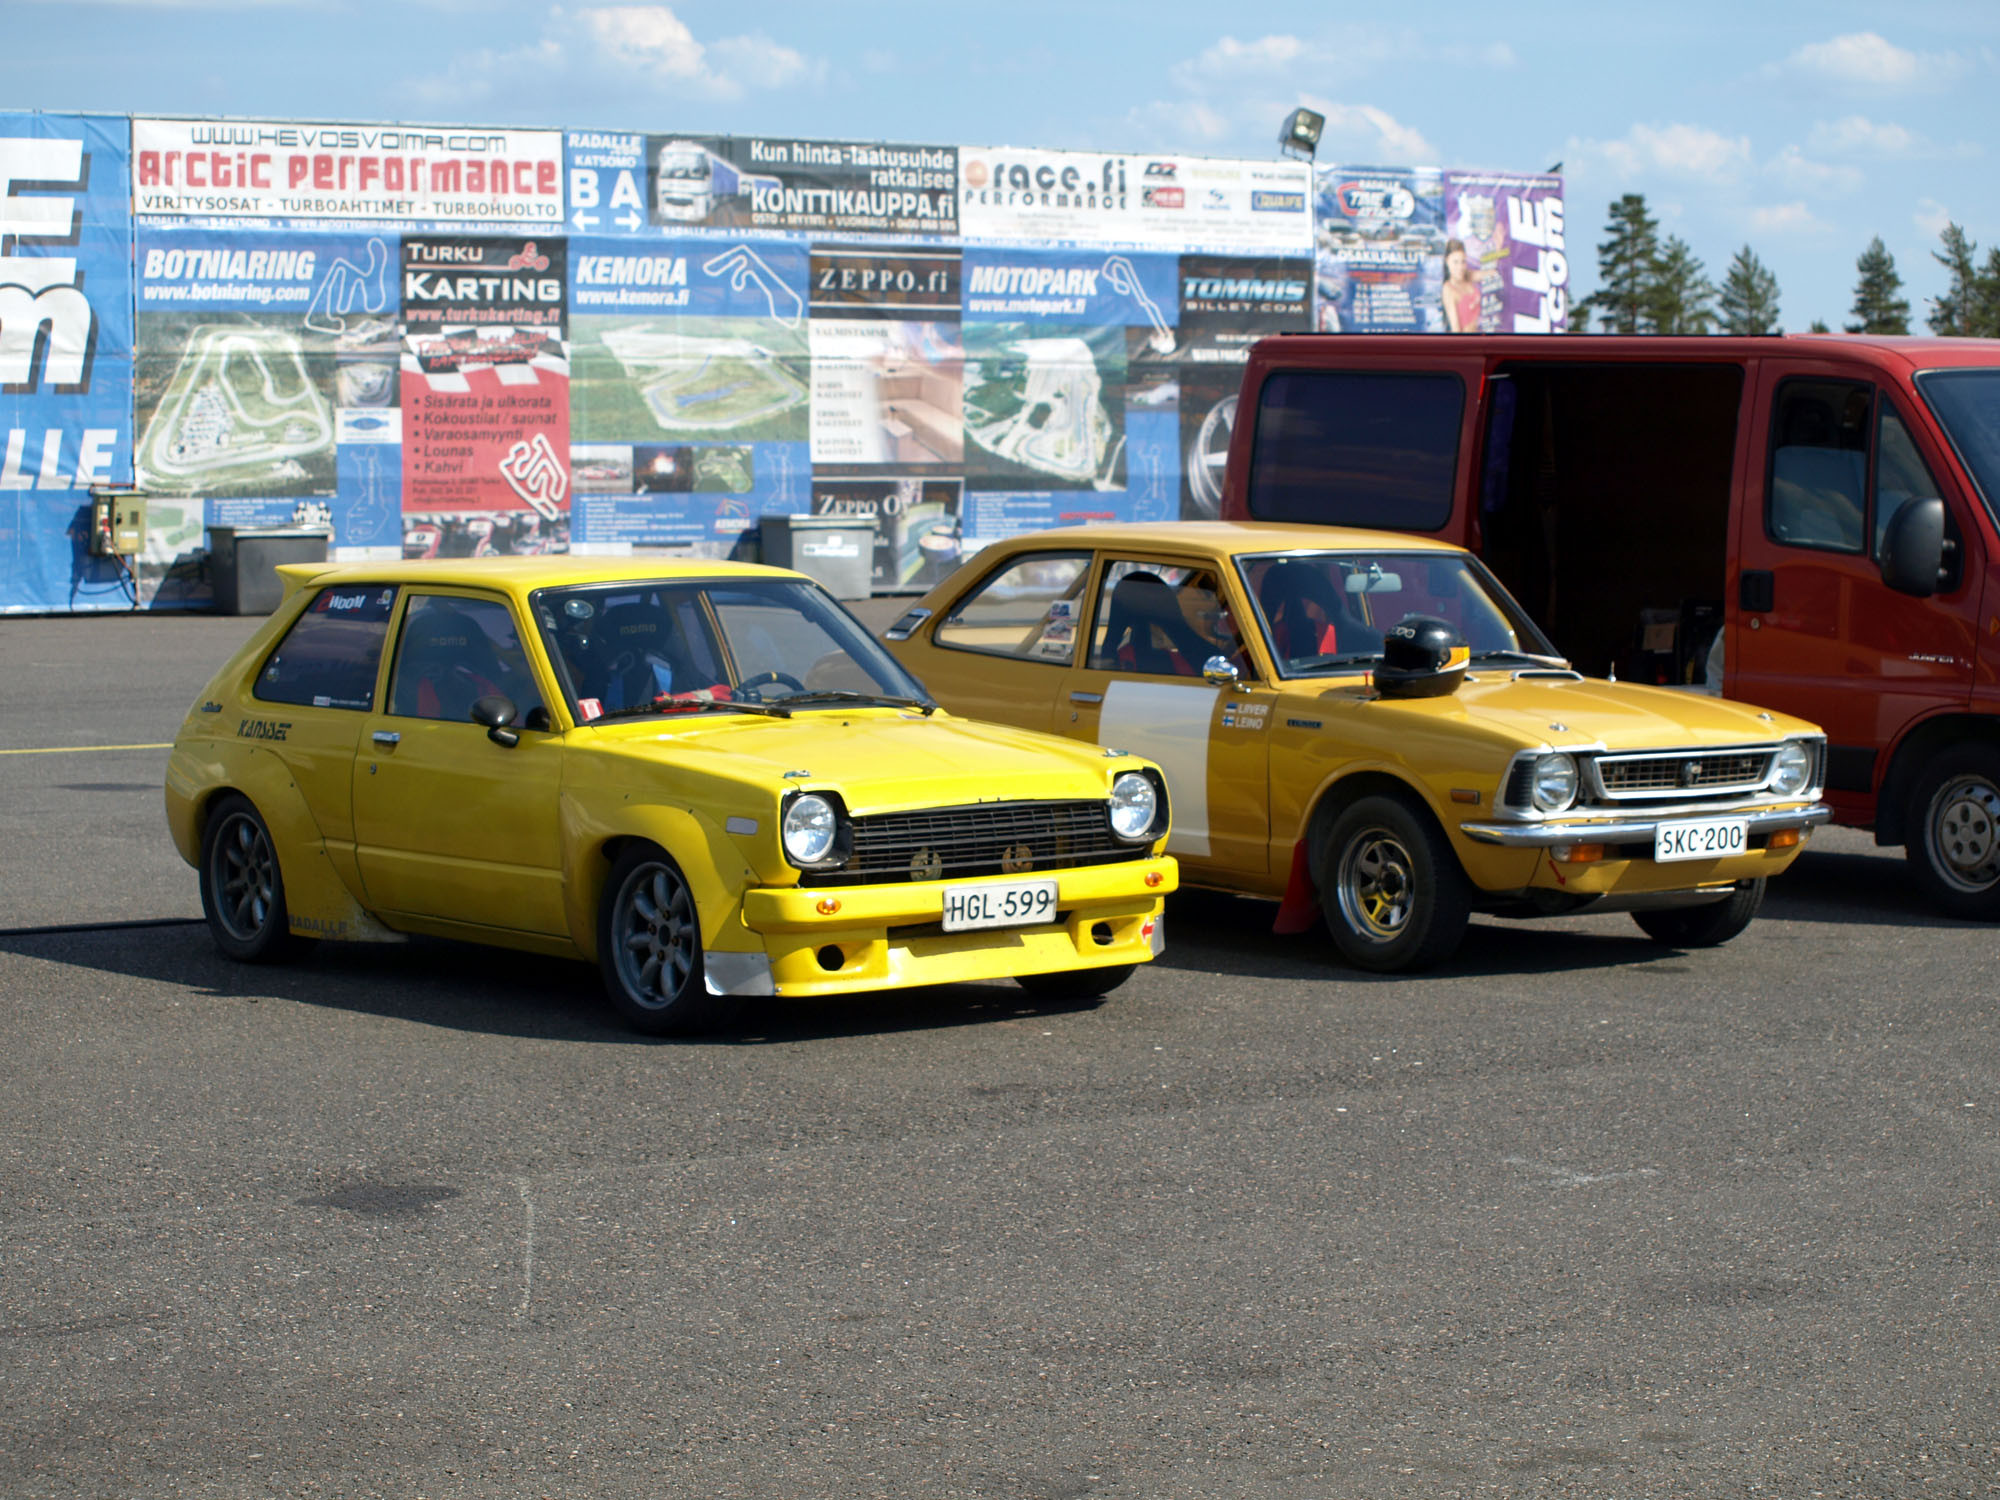 Fintoys ratapÃ¤ivÃ¤ 23.5.2014 Alastaro Circuit, Old toyotas: Starlet & Corolla